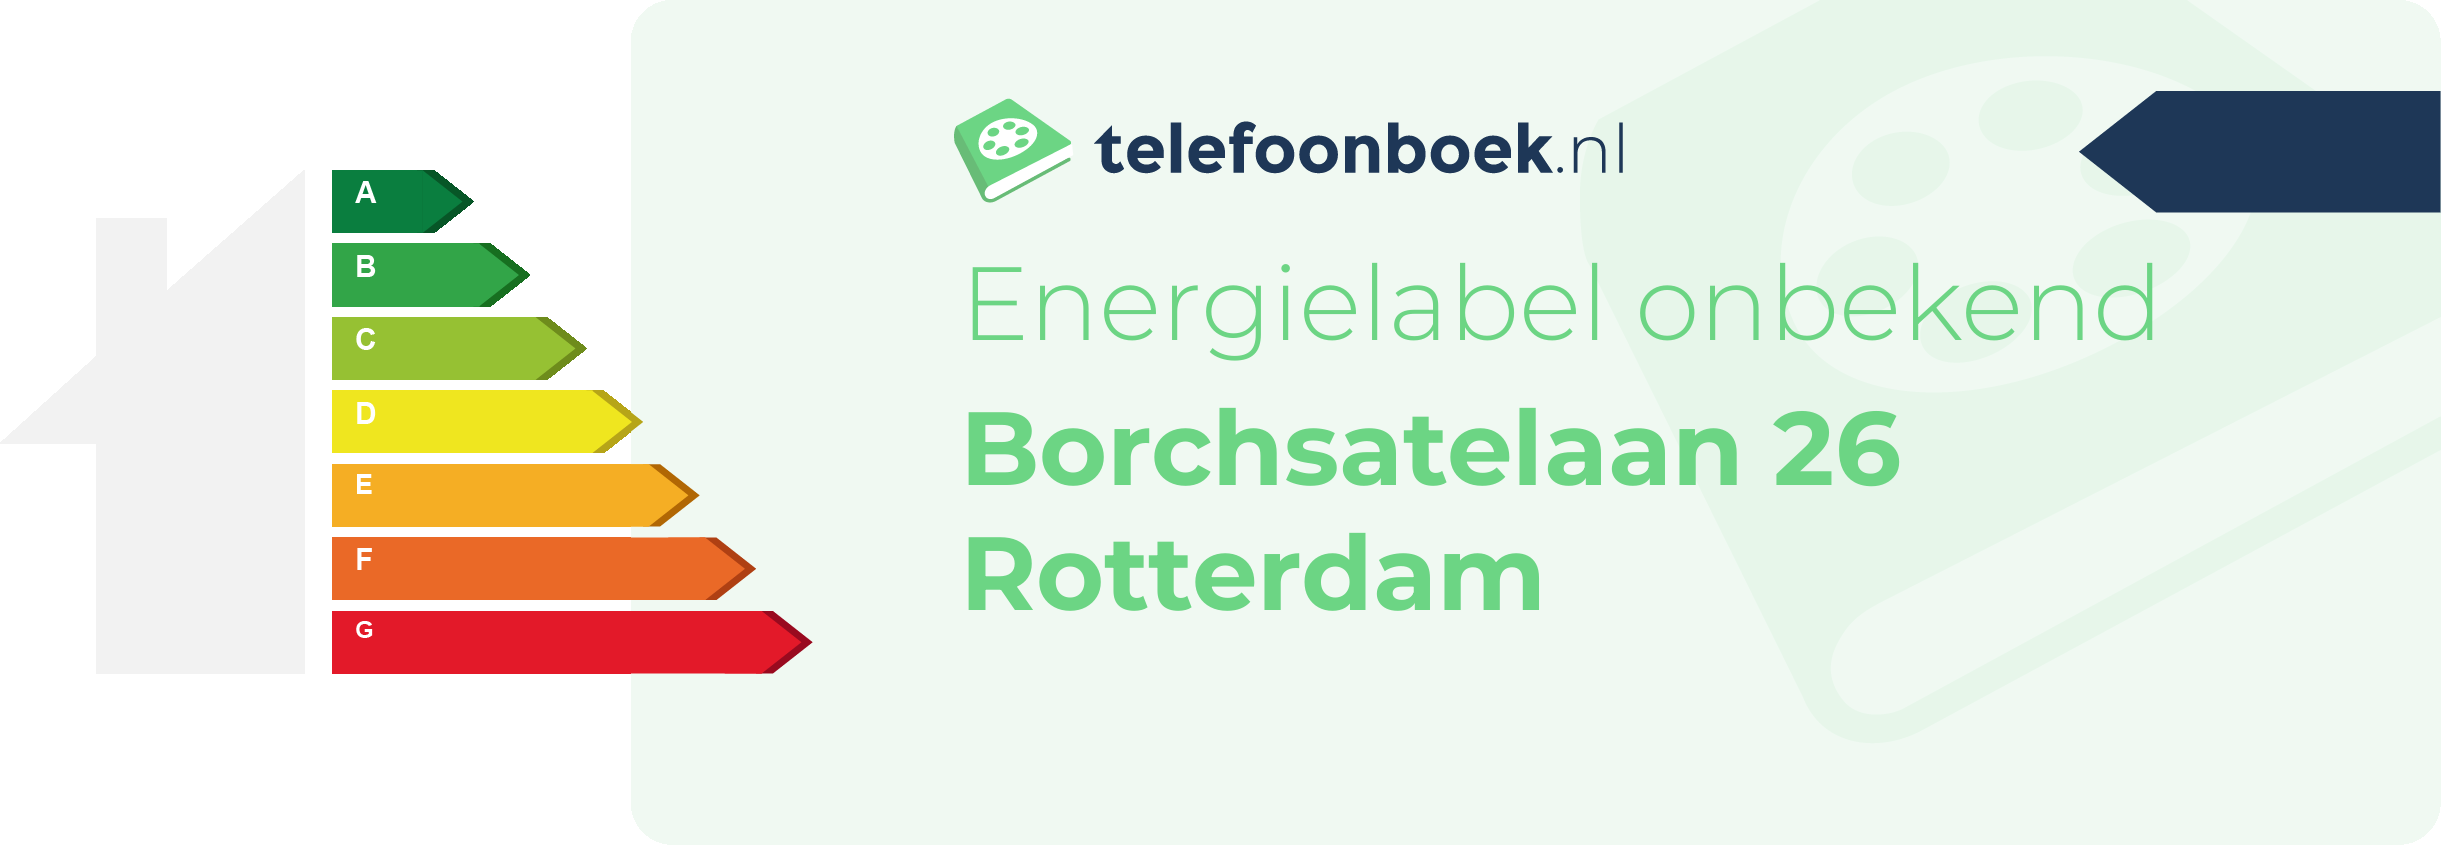 Energielabel Borchsatelaan 26 Rotterdam